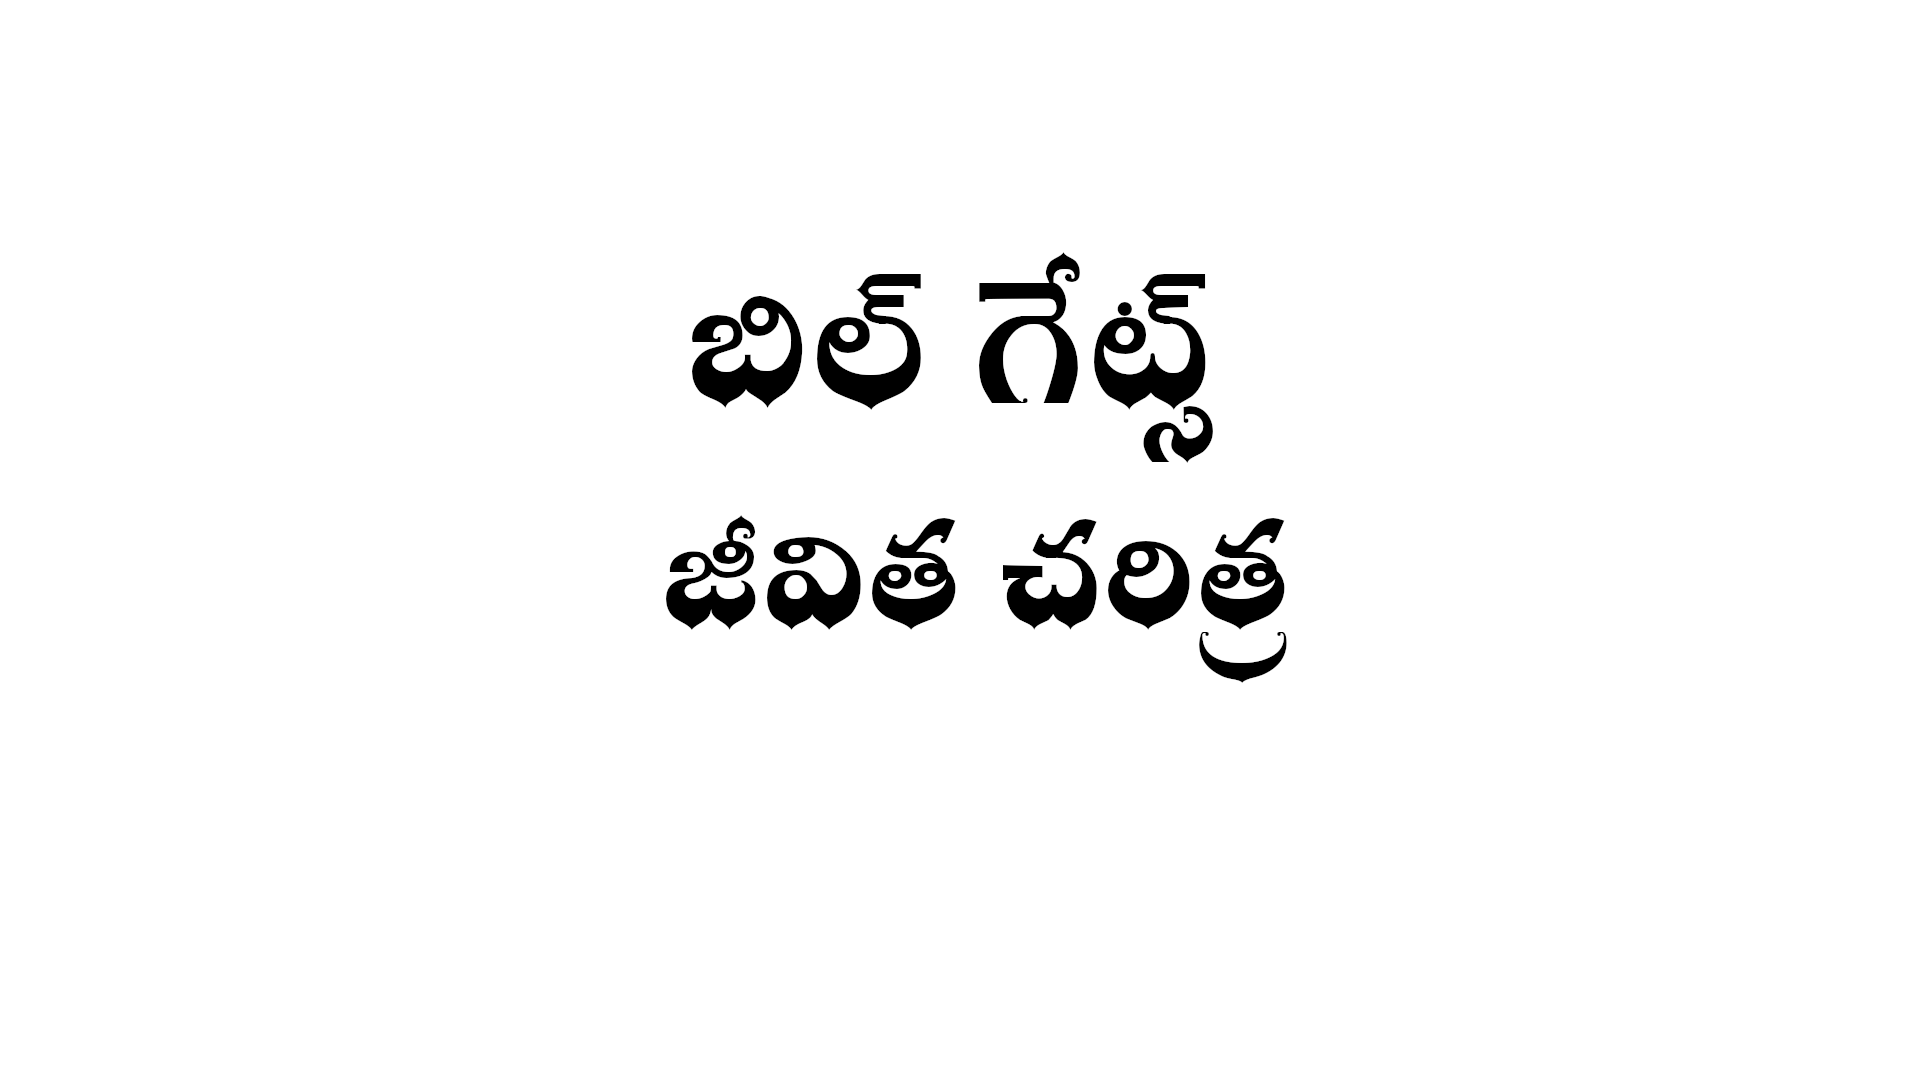 Bill gates biography in Telugu